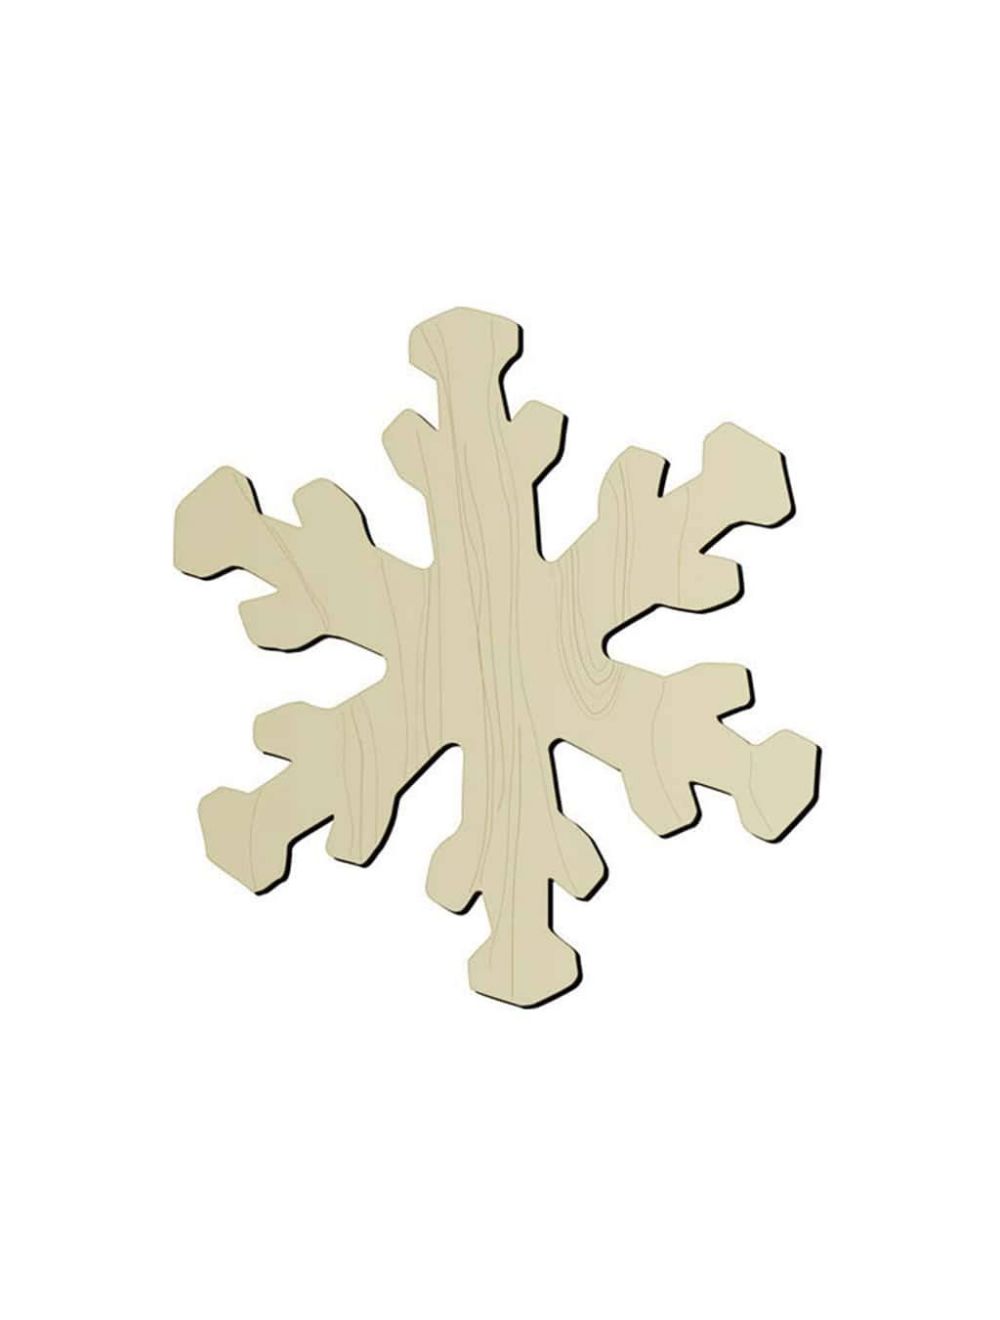 Shape Snowflake Craft